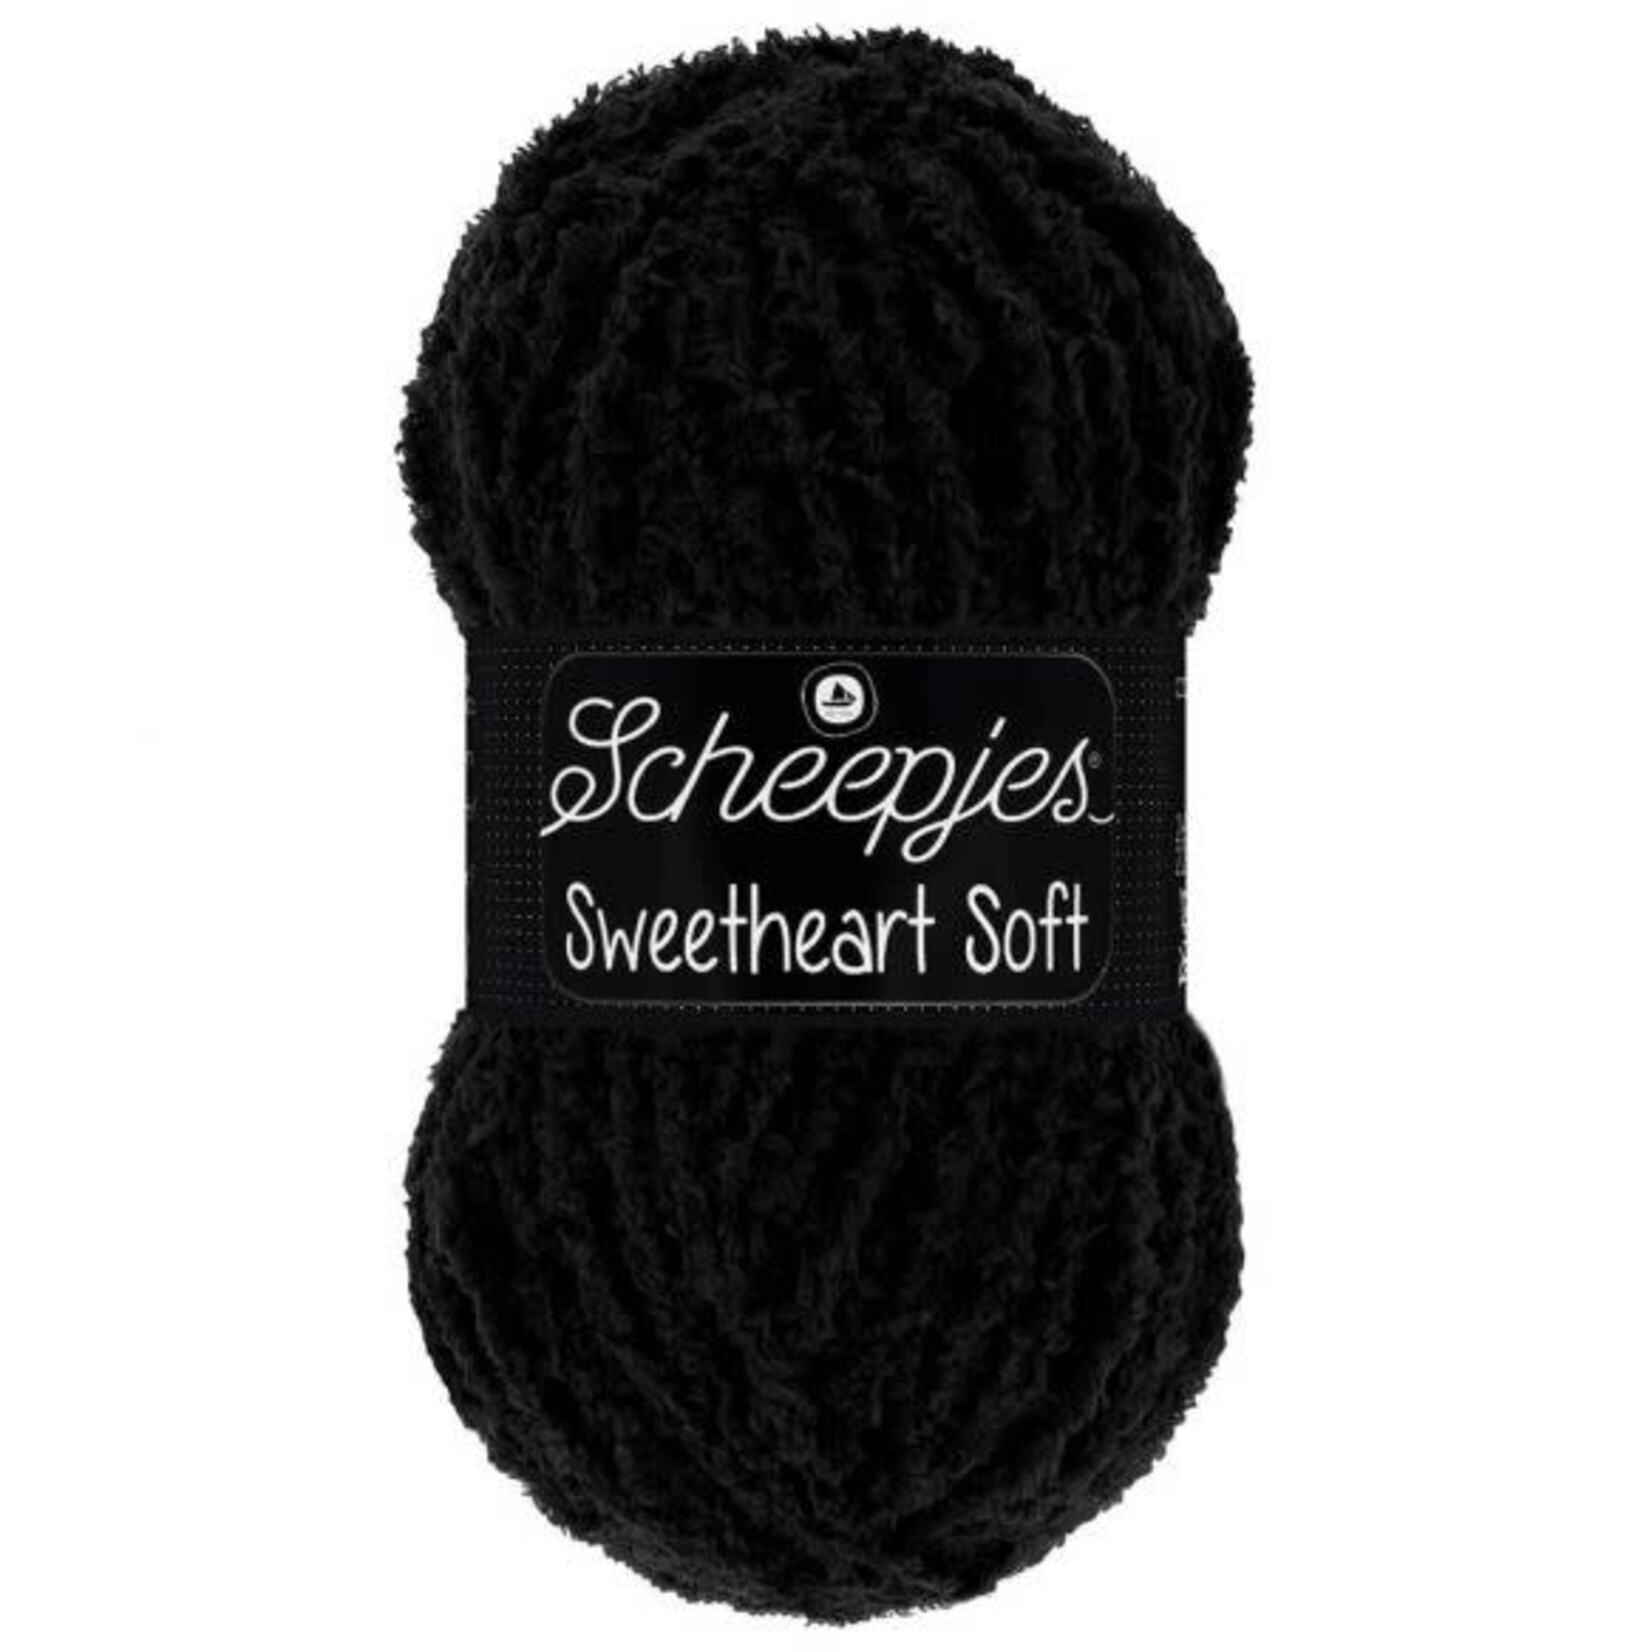 Scheepjes Sweetheart Soft  - 004